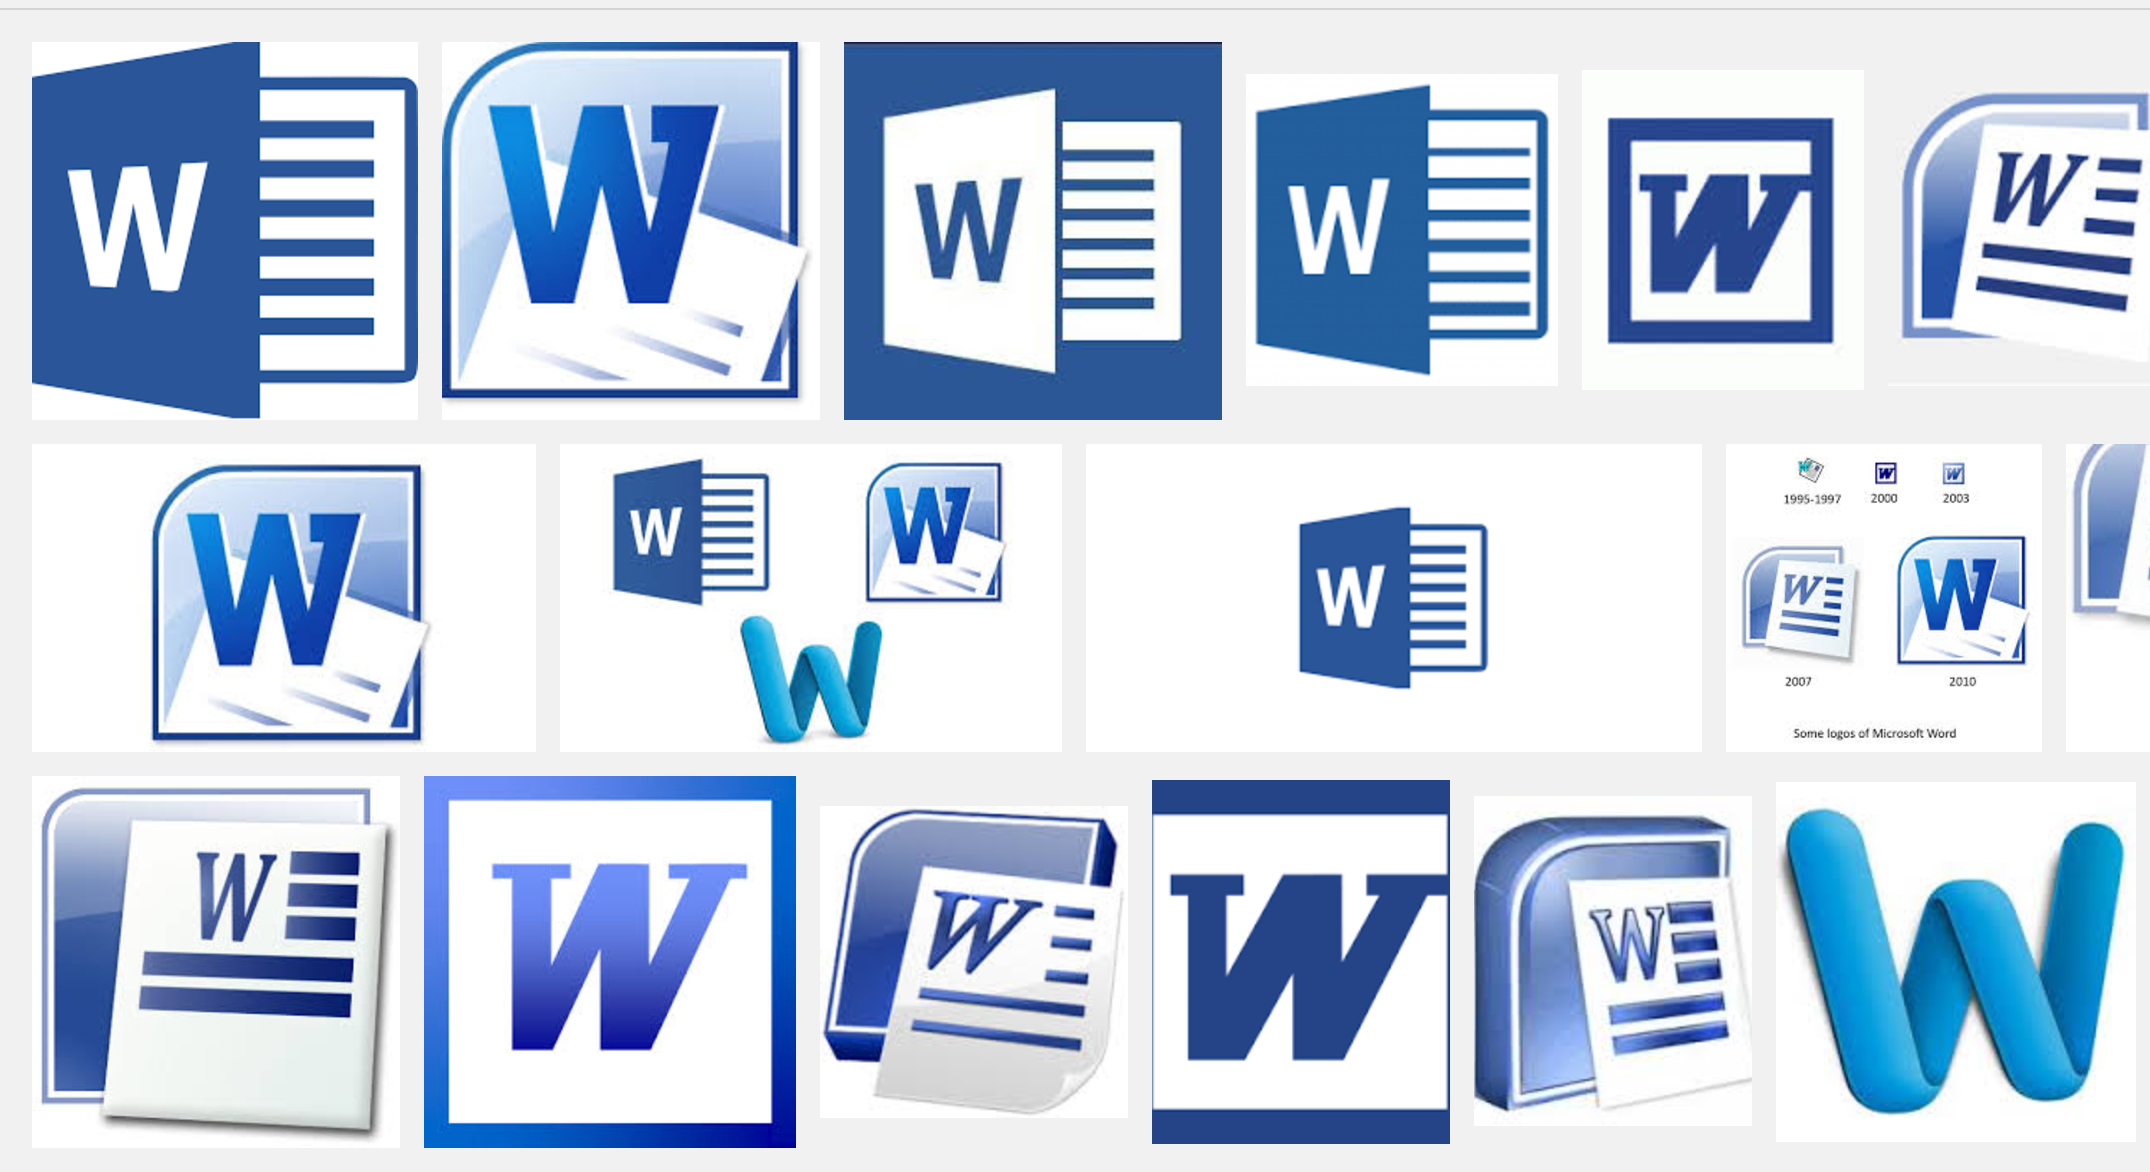 Ворд версия 2007. Значок Microsoft Office Word. Текстовый процессор Microsoft Office Word. Картинки для ворда. Значок Word 2007.